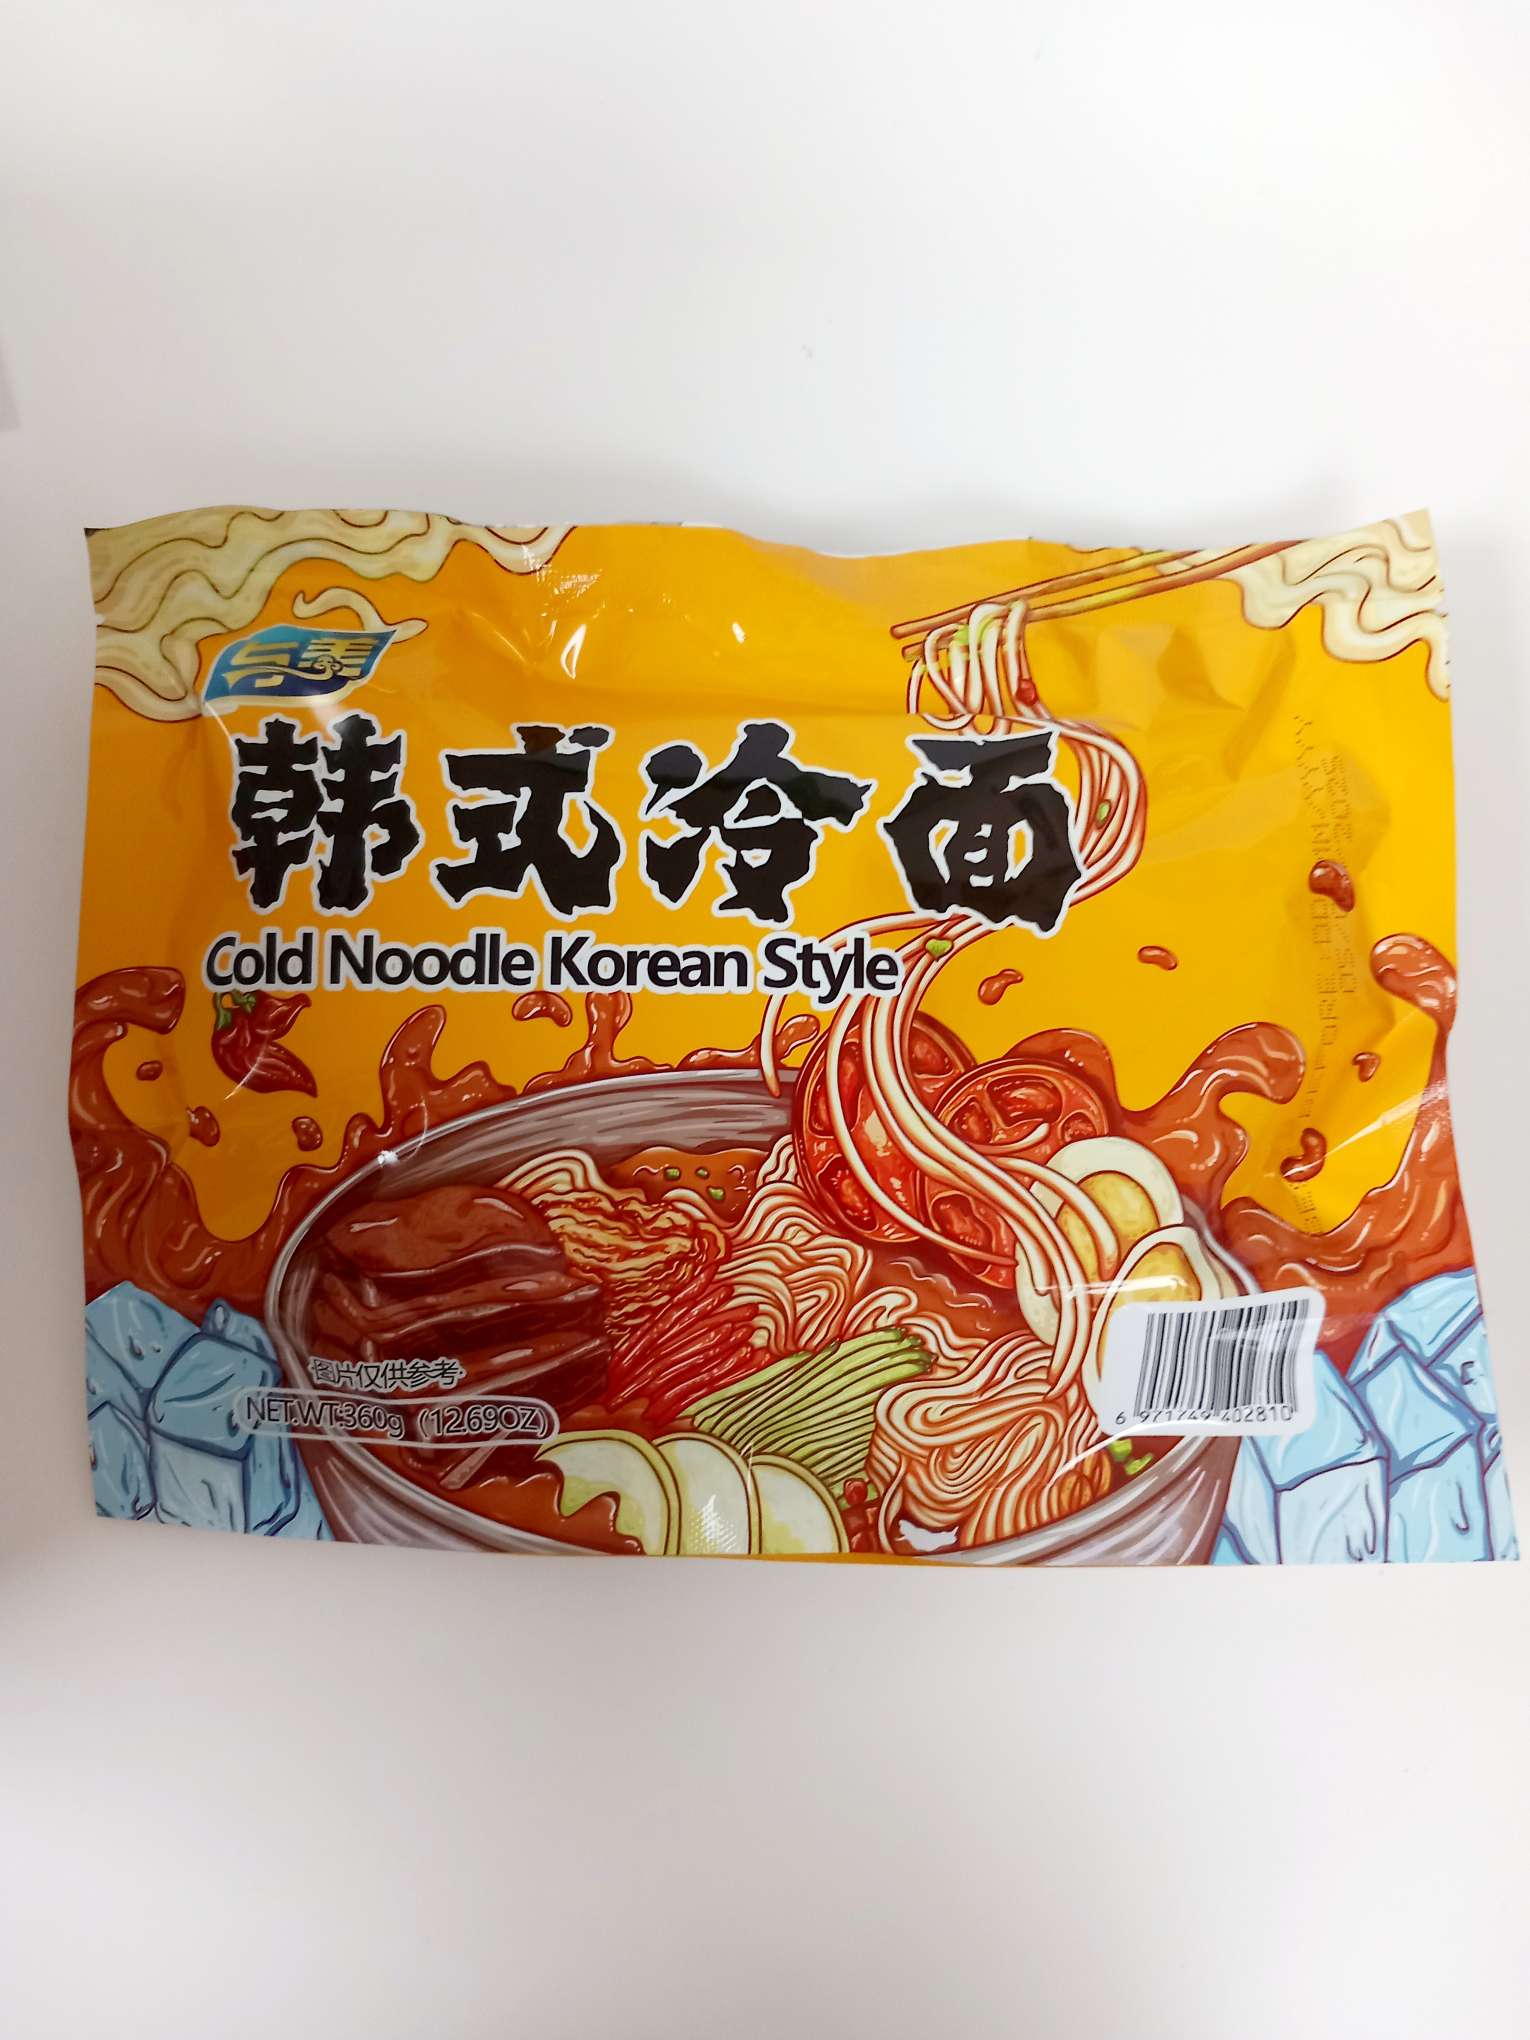 YUMEI Cold Noodle Korean Style 360g